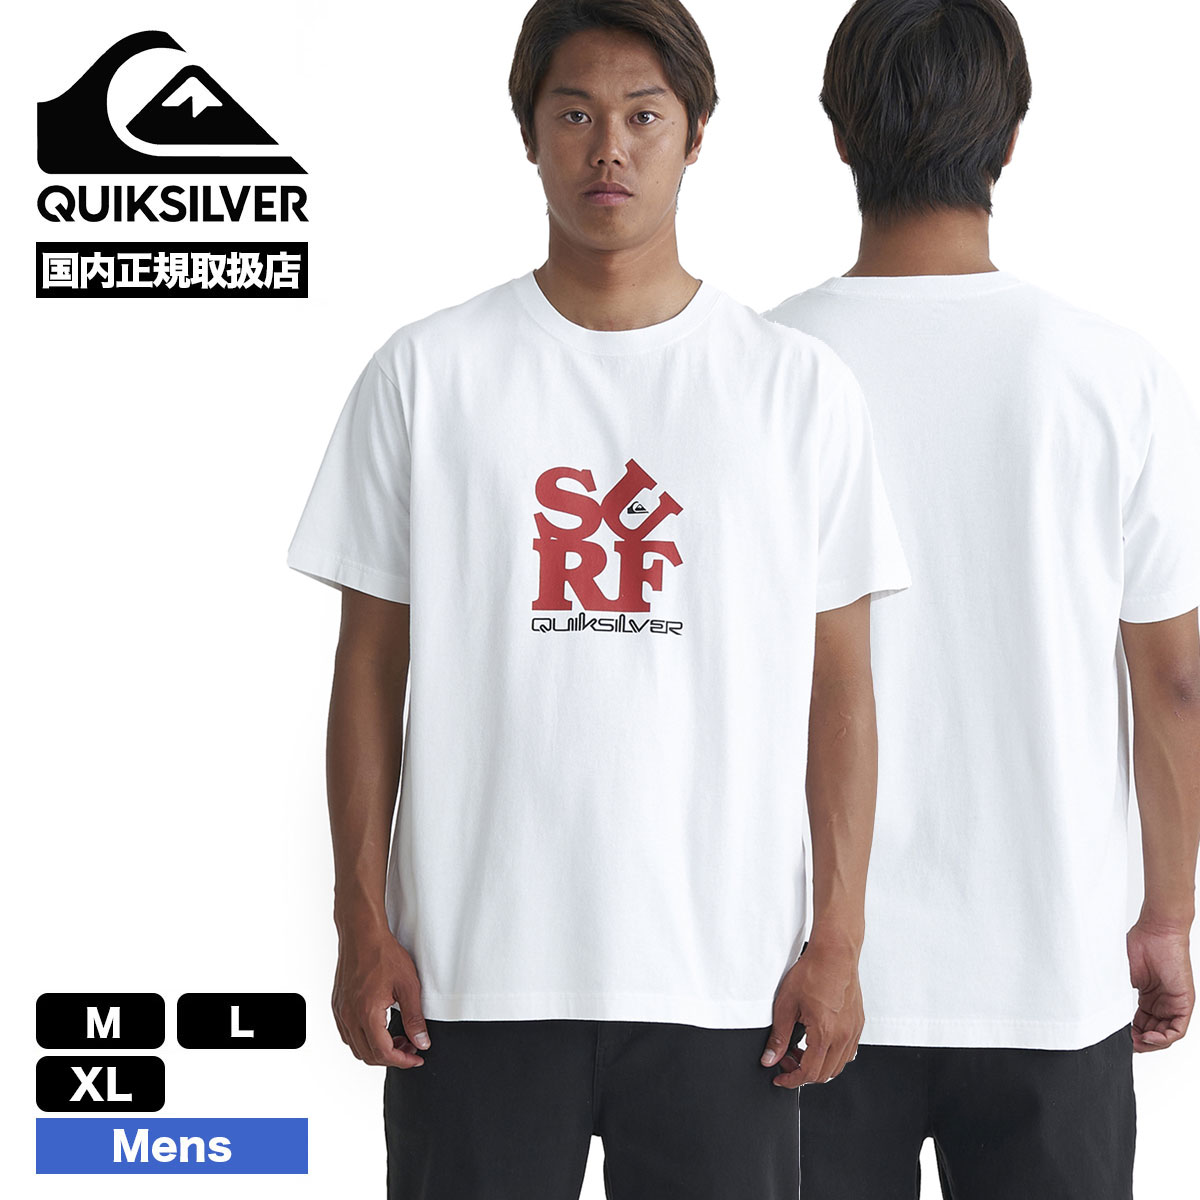 QUIKSILVER クイックシルバー メンズ SURF ST 半袖Tシャツ サーフ ロゴ S/S ...